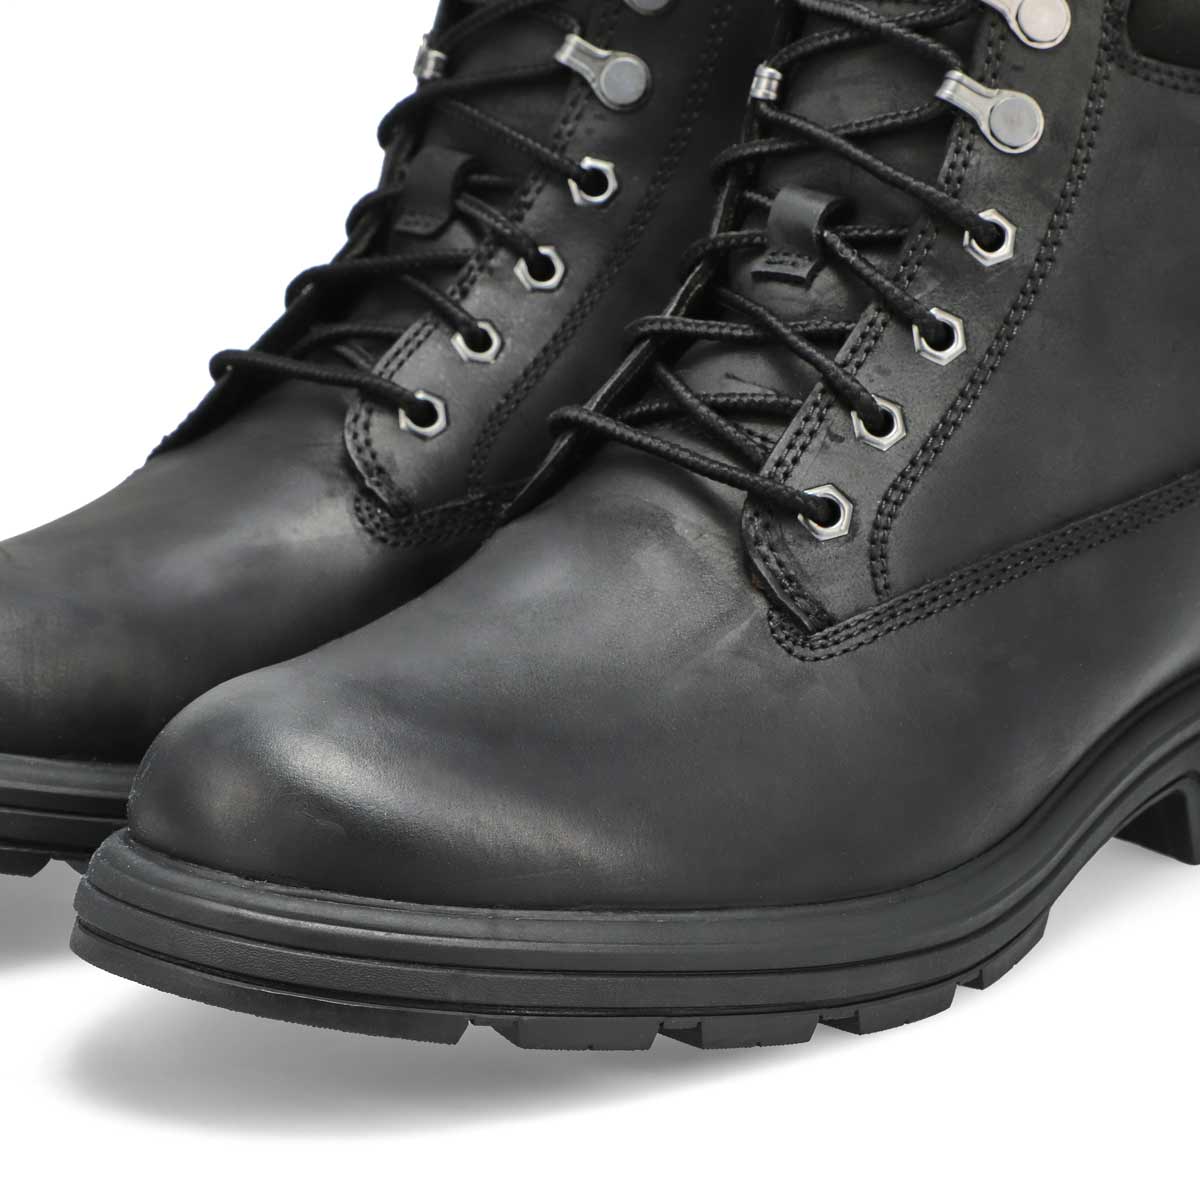 Men's Biltmore Waterproof Mid Boot - Black